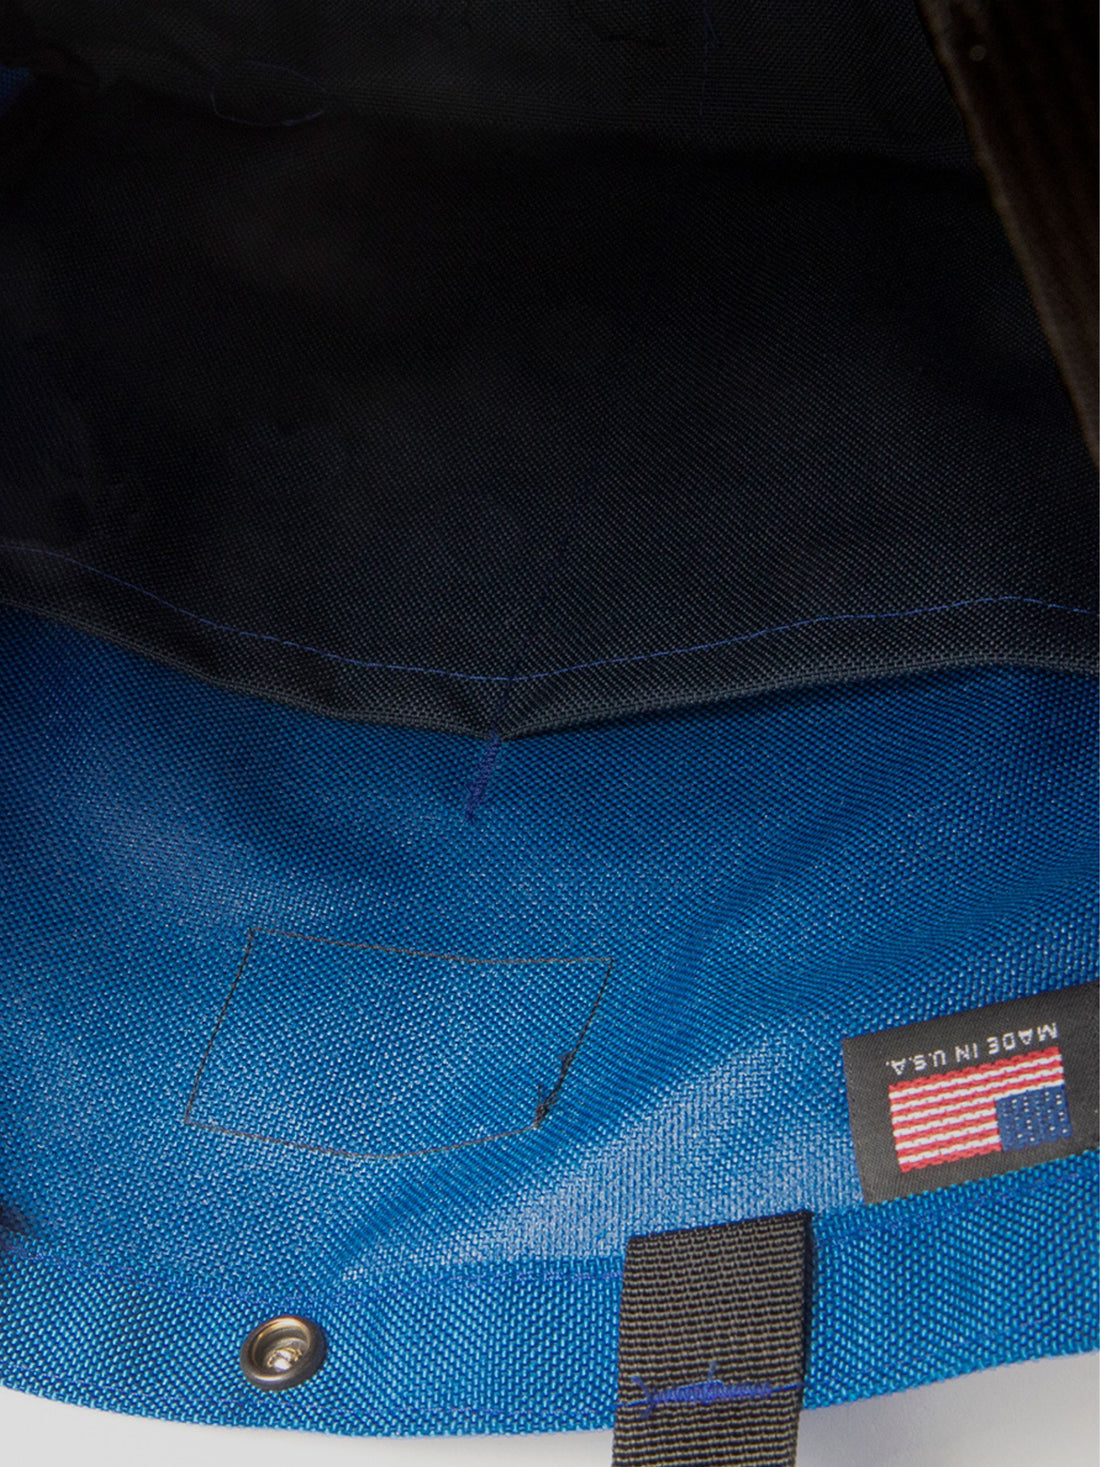 Multi pocket bag royal blue - Bags in Progress